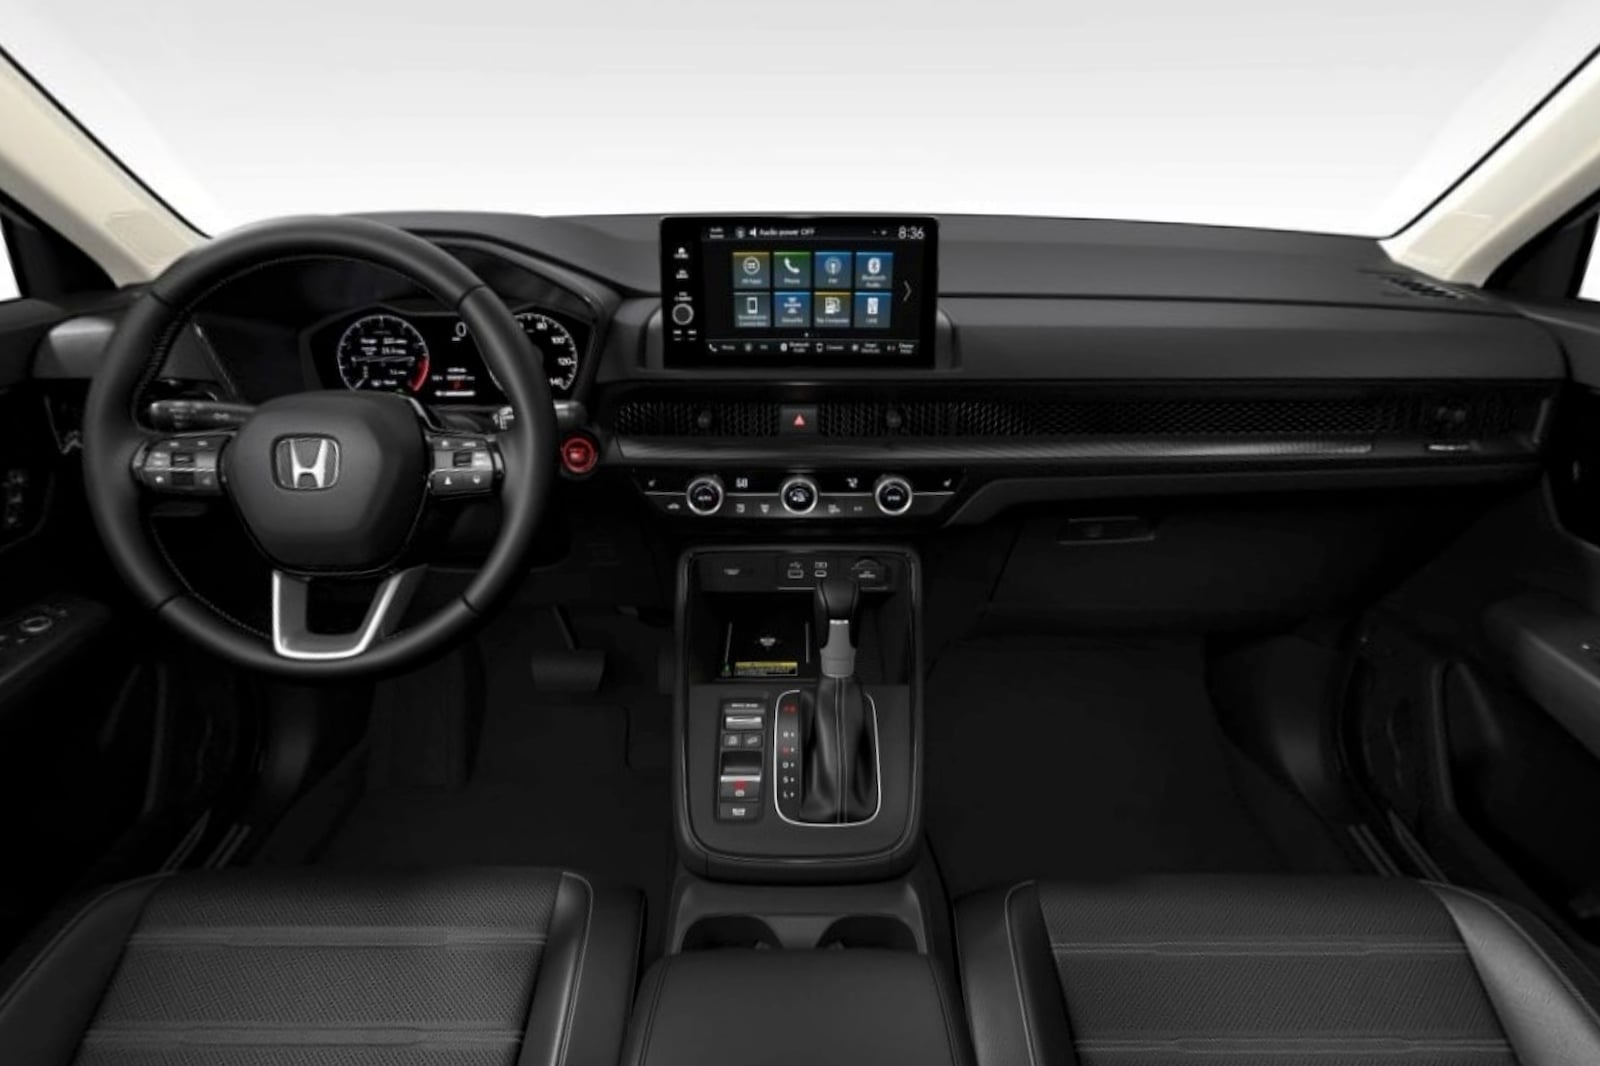 2021 Honda CRV Black Edition  Best Family SUV New Exterior Interior   Features  New CRV 2021  YouTube